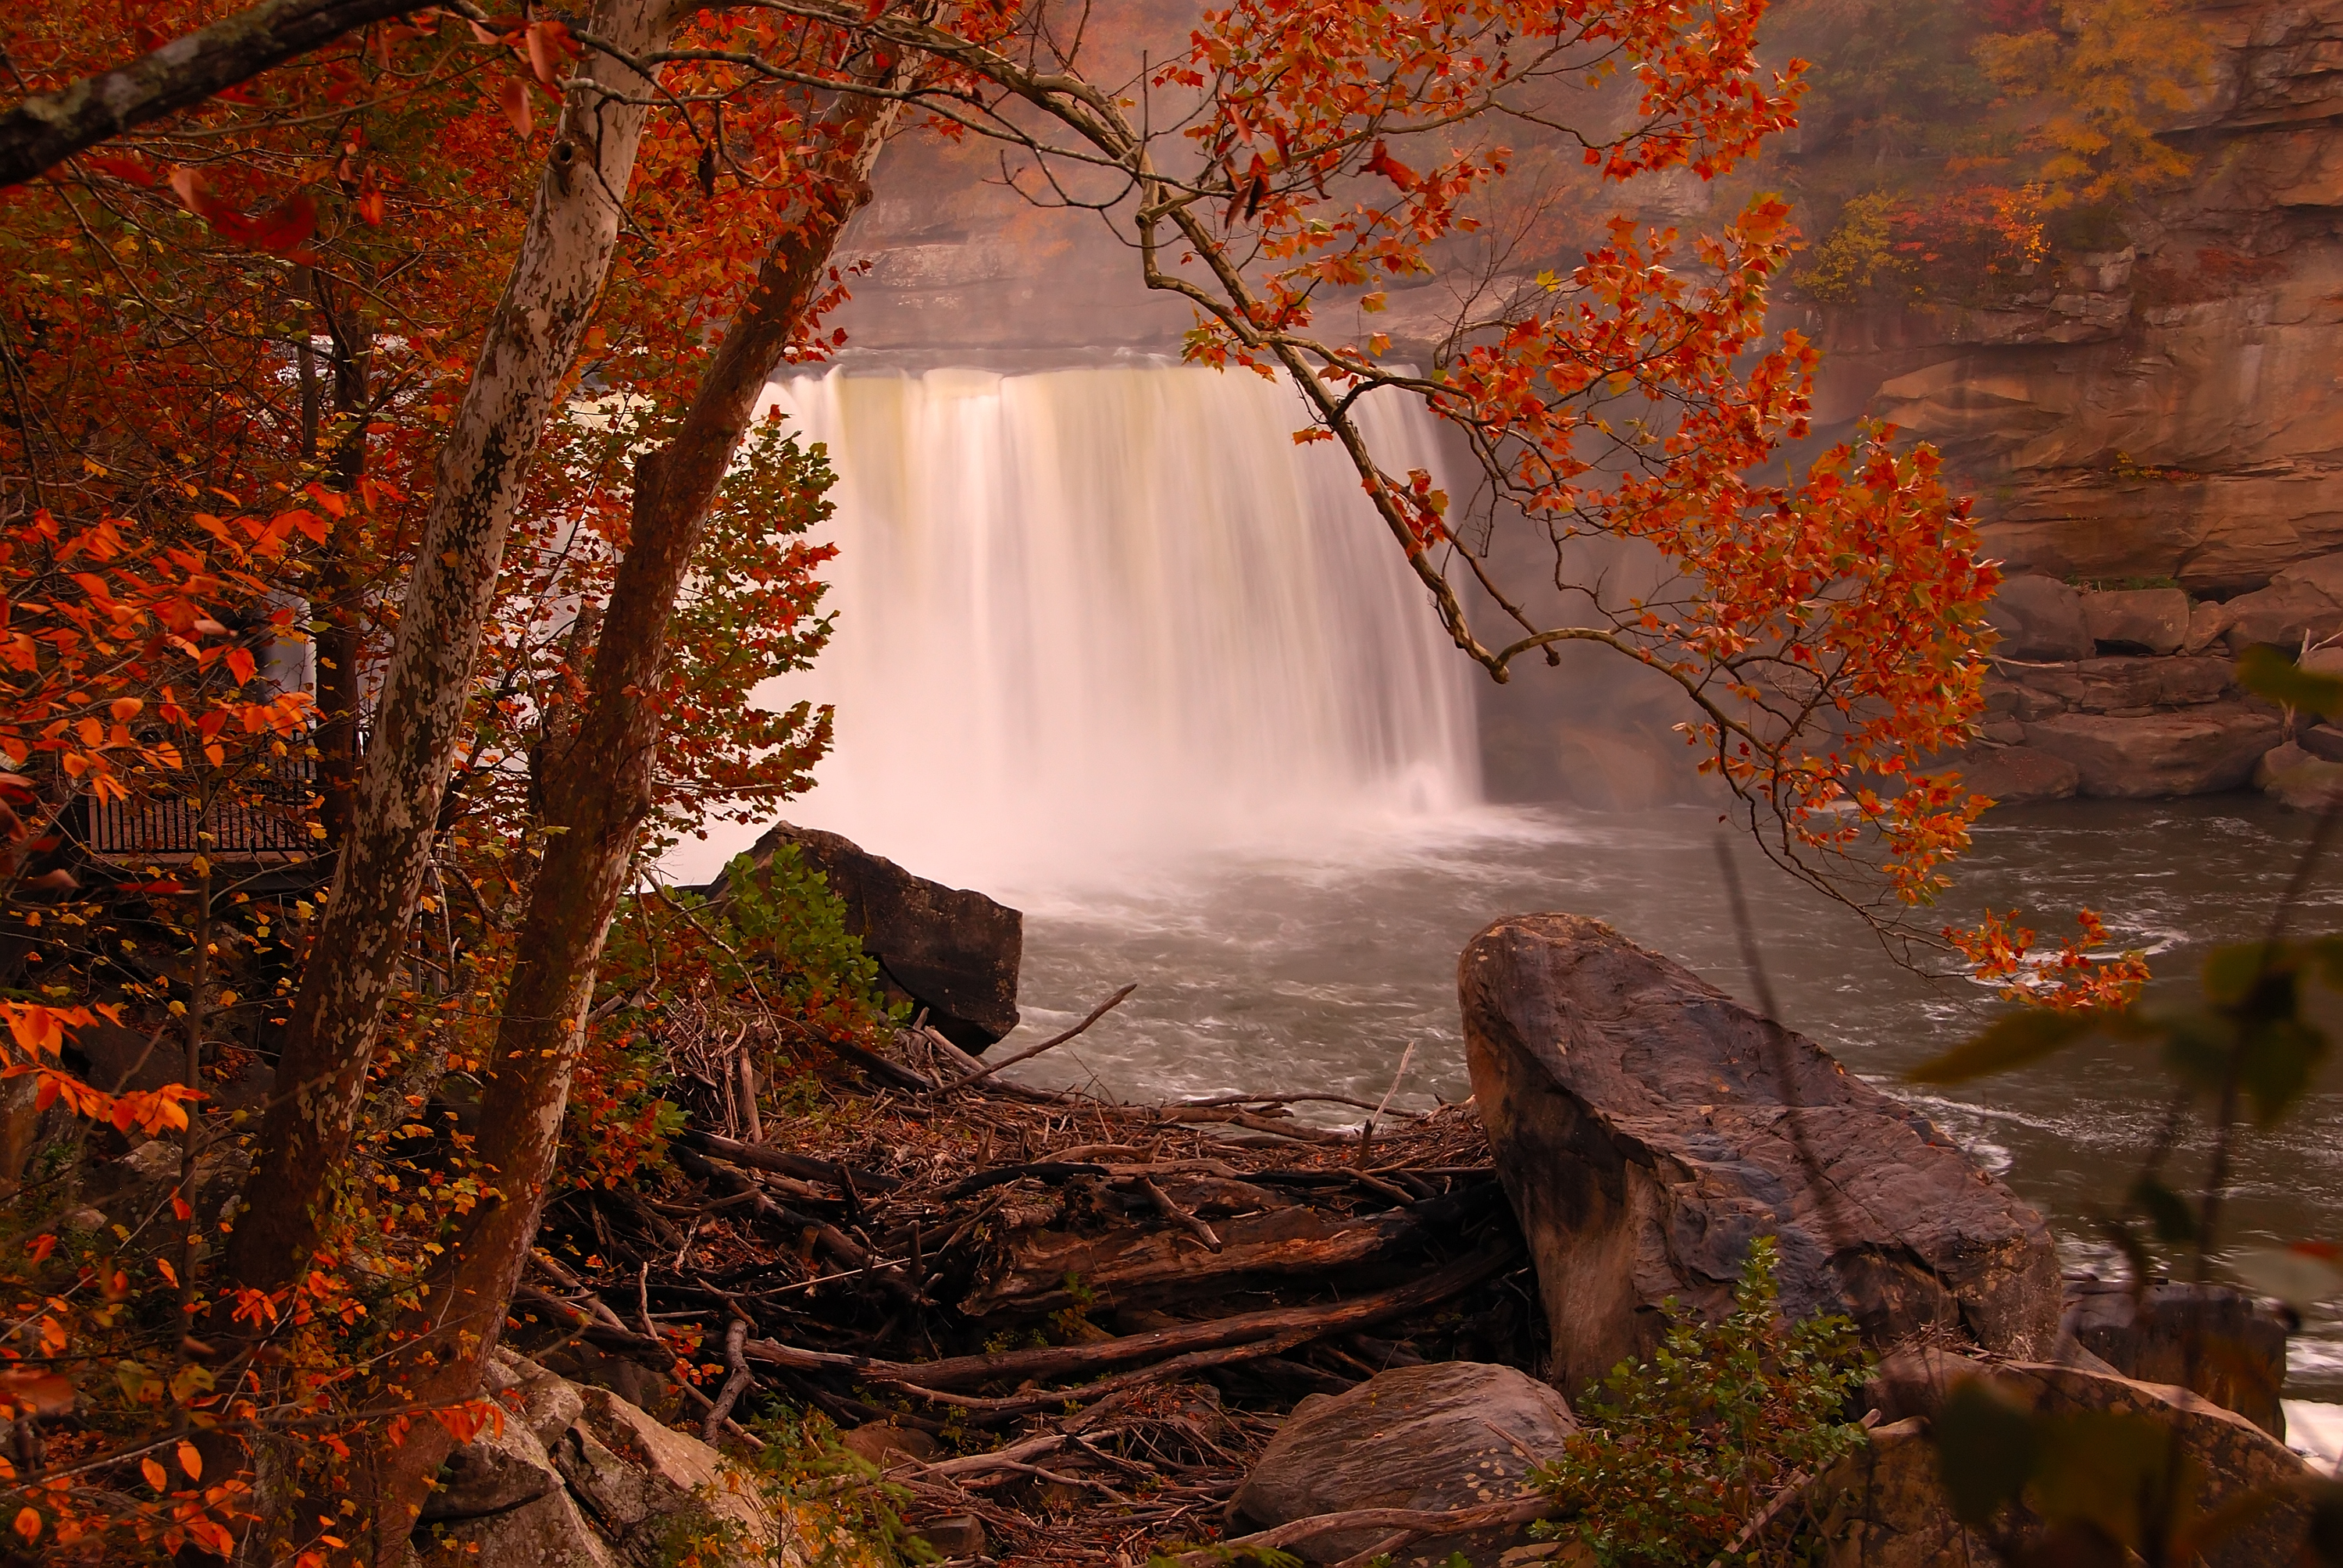 Niagara of the South: The Cumberland Falls in Kentucky